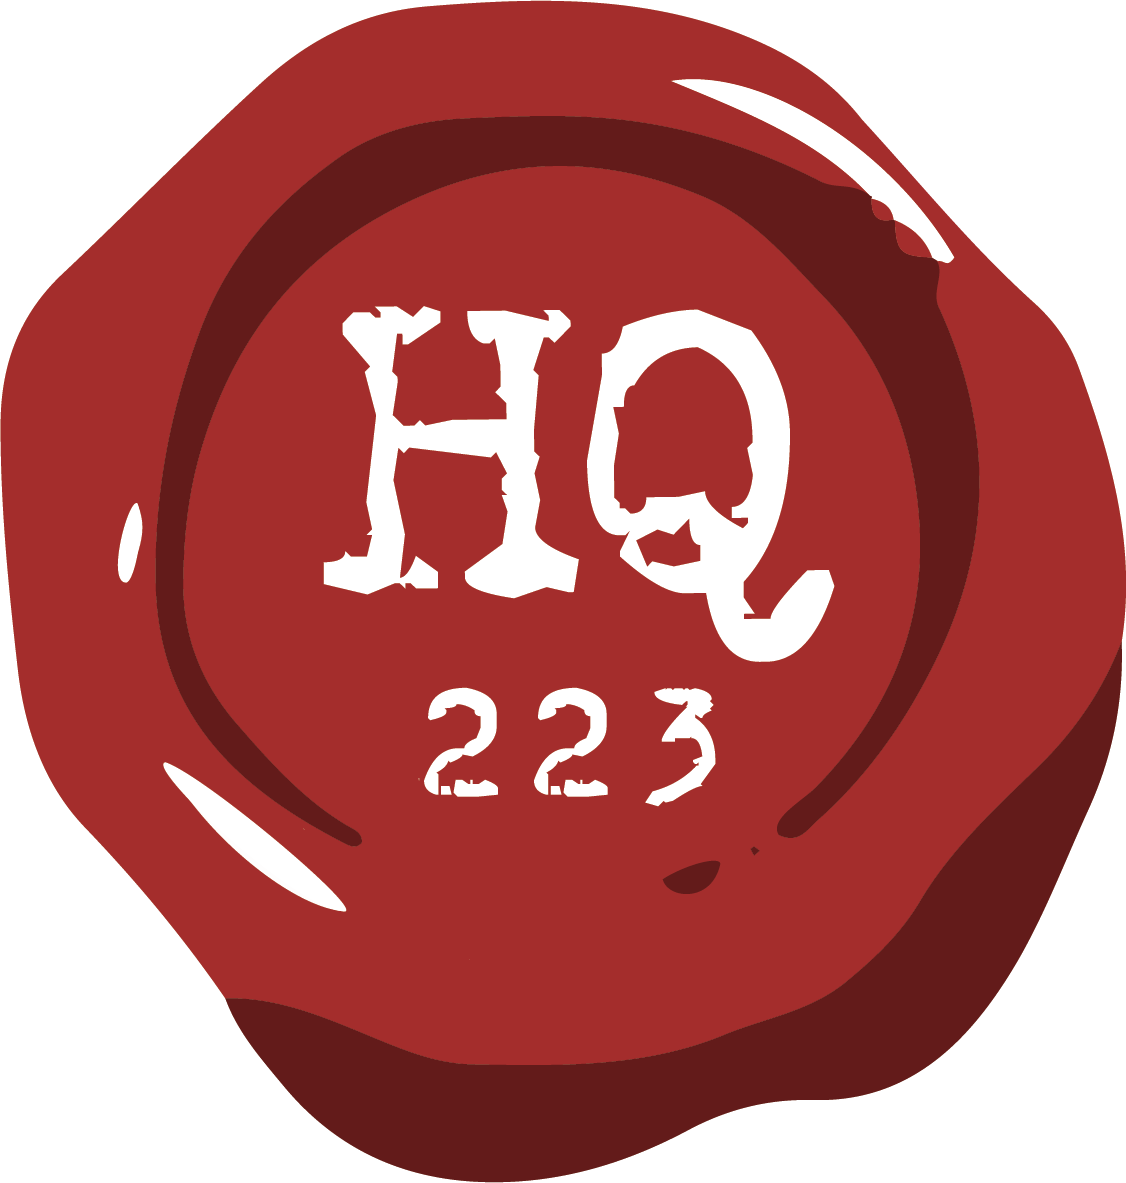 HQ223 logo (1).png